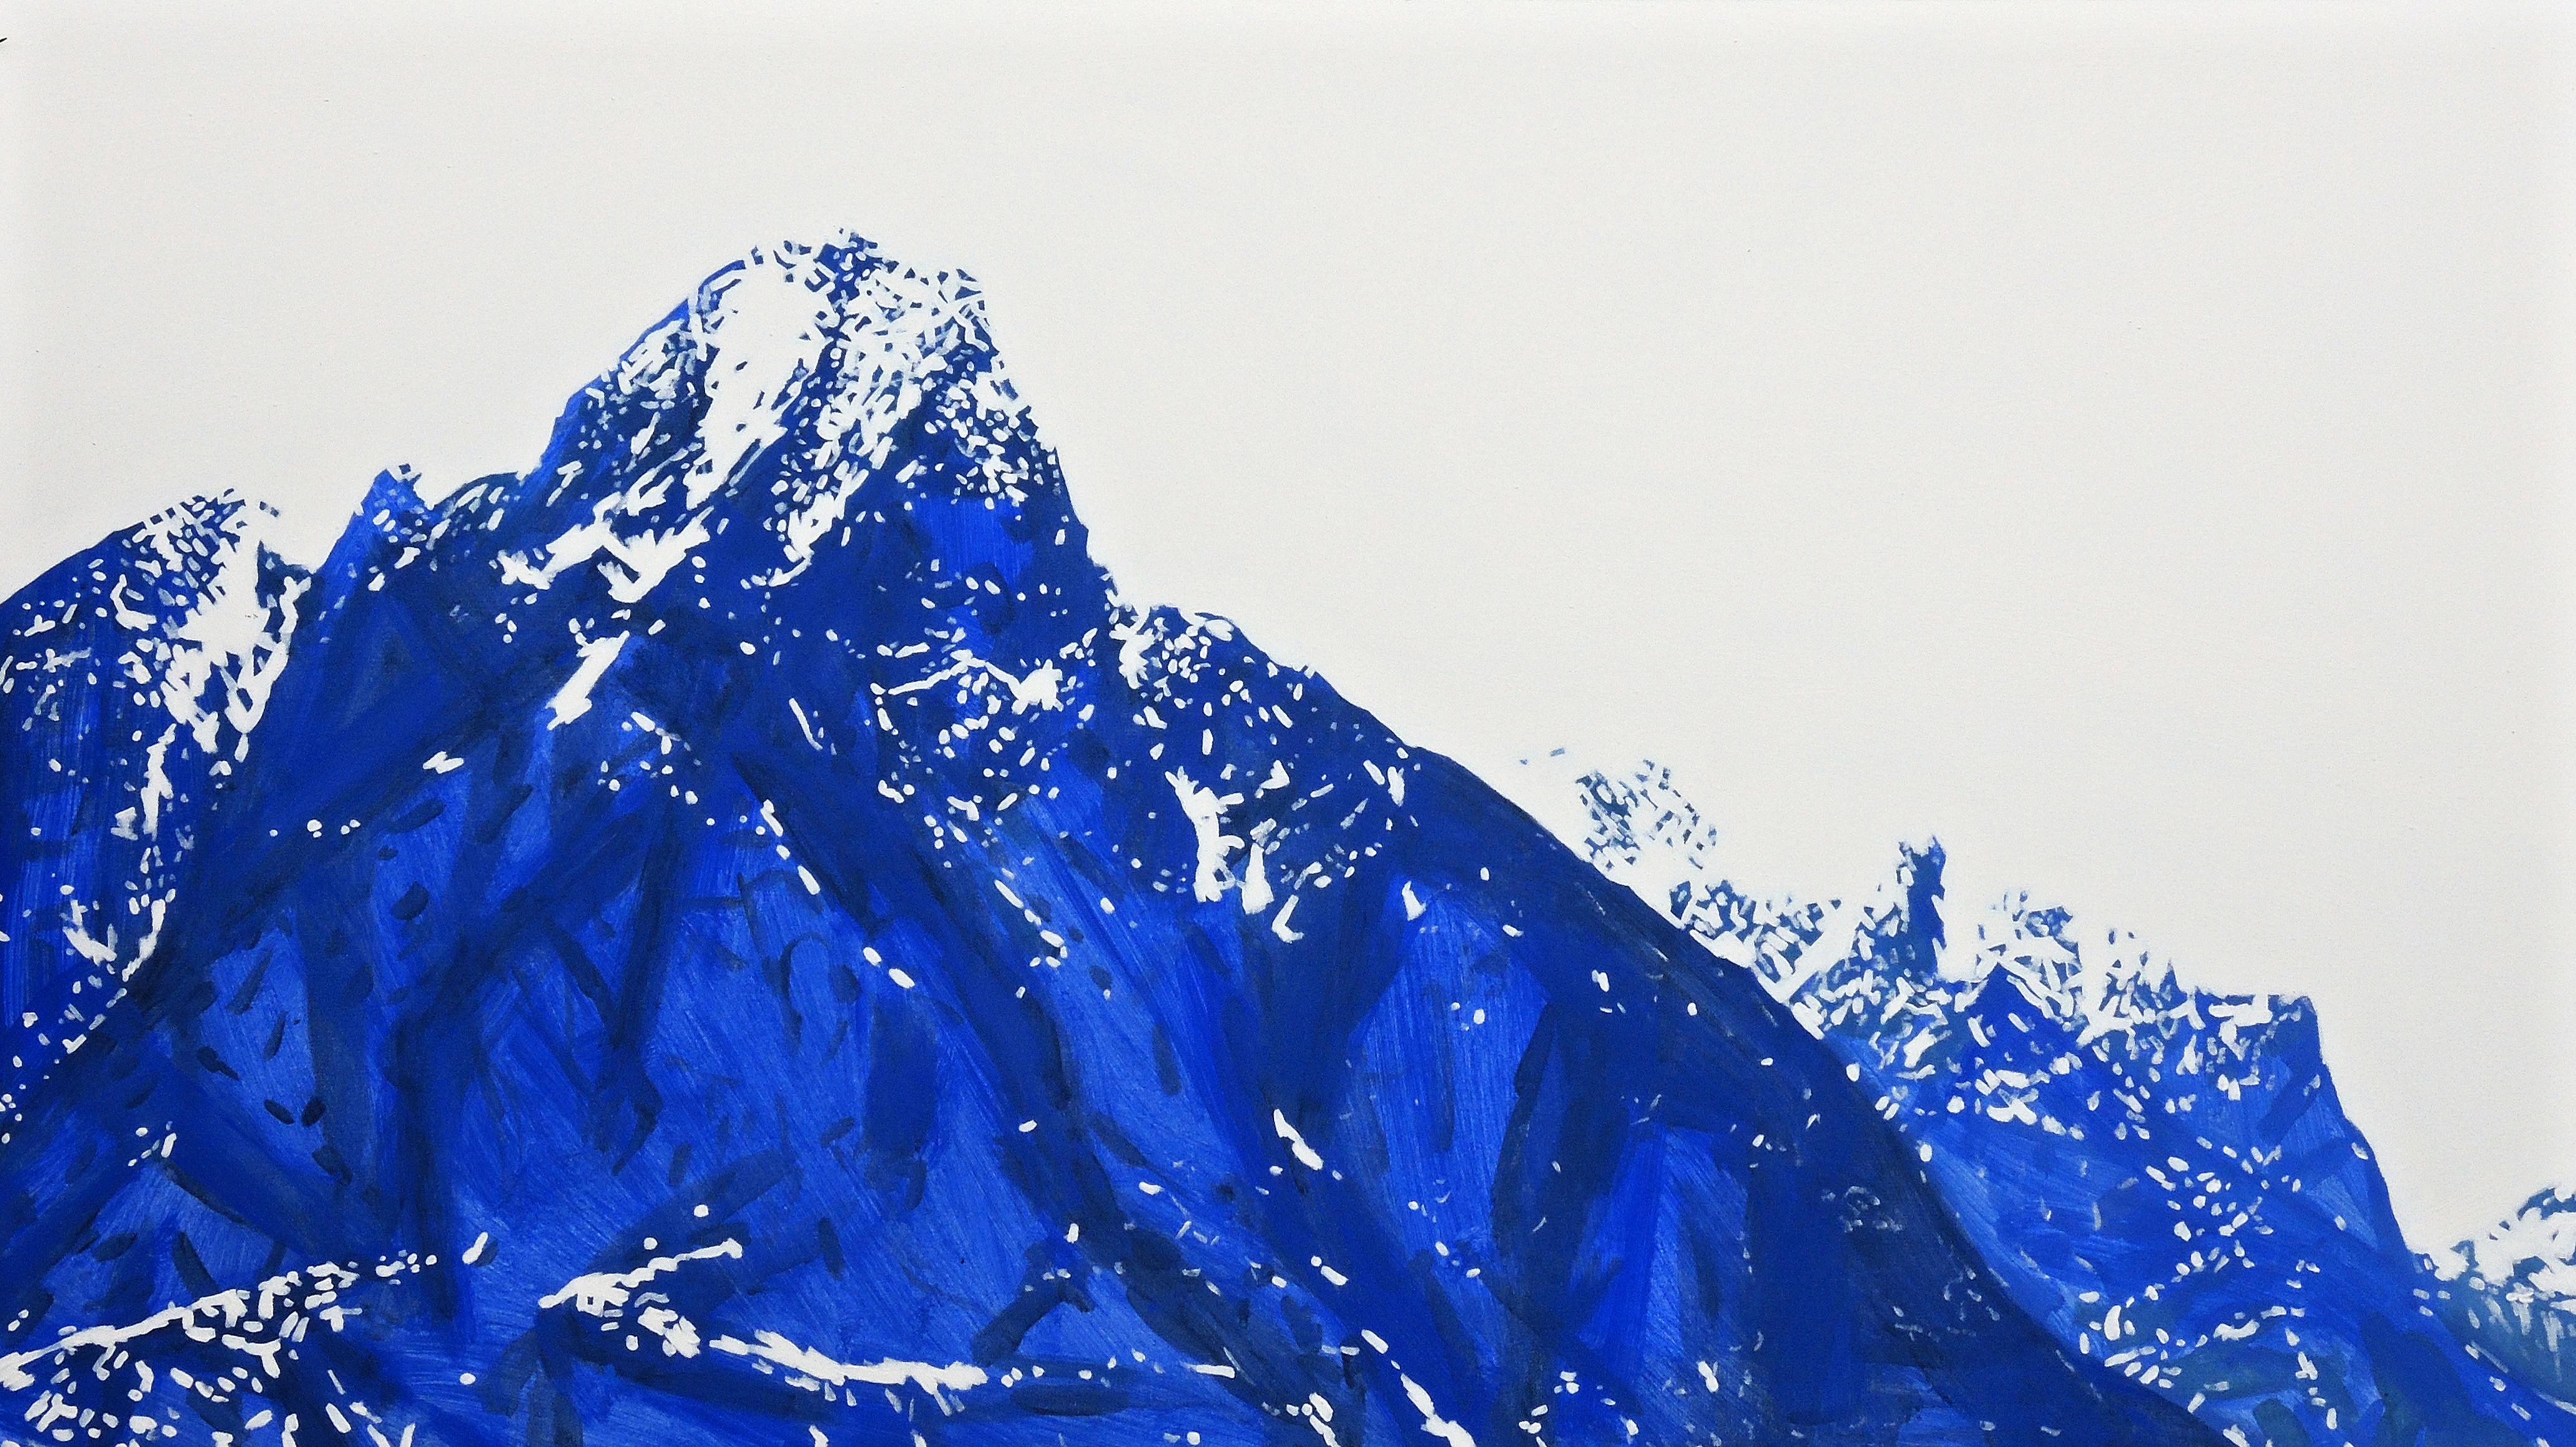 Robert Motelski Figurative Painting - Mountains 29 November 12:57 -  Modern Nature Landscape Oil Painting